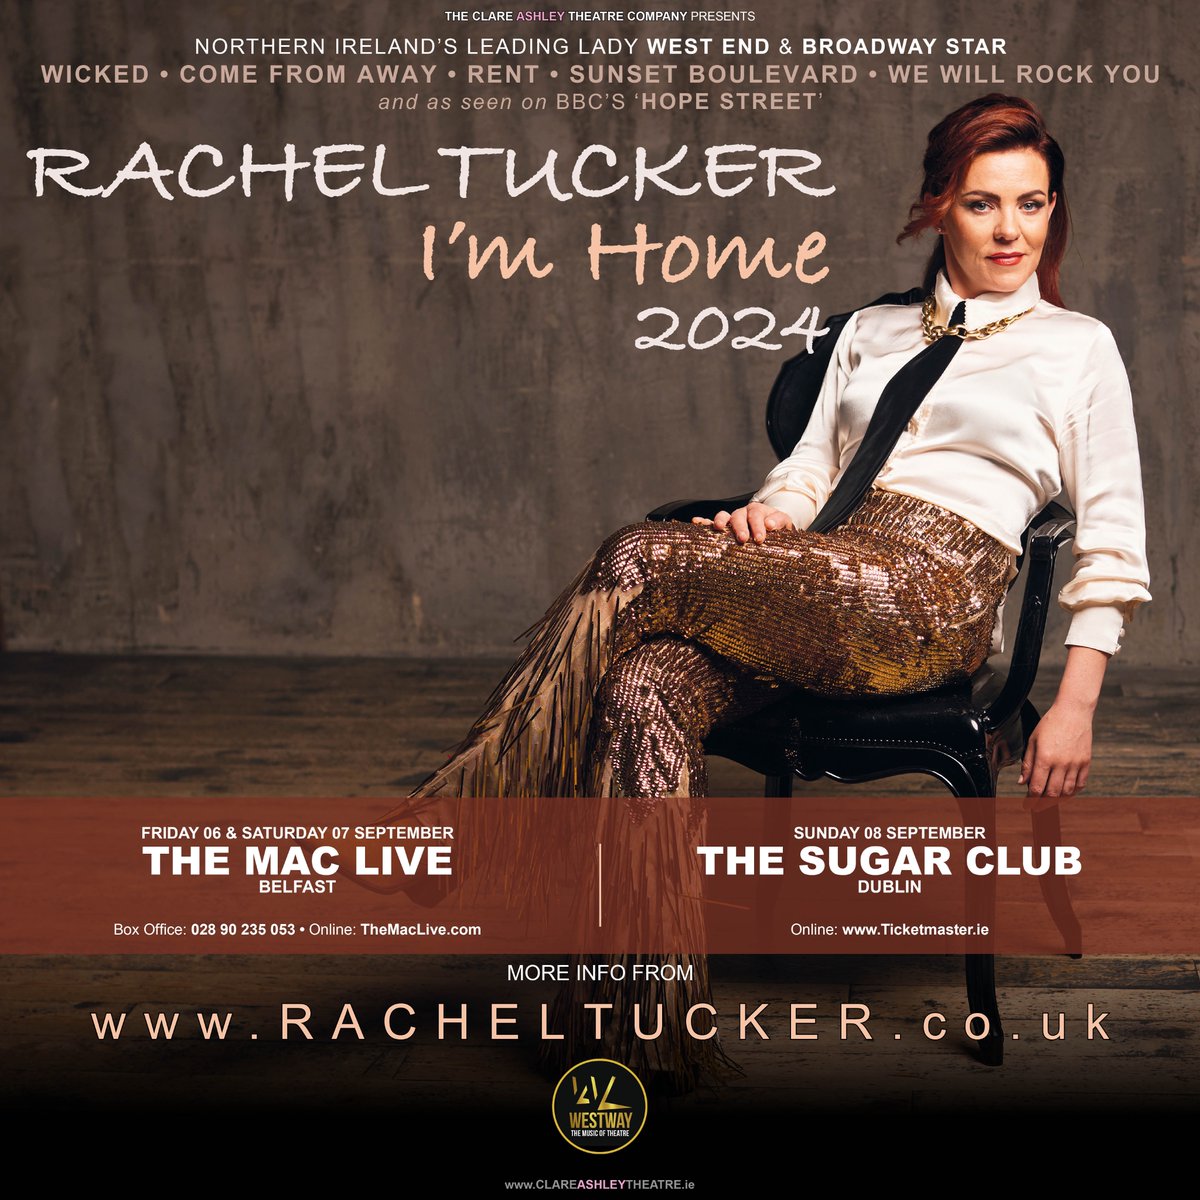 𝗢𝗡 𝗦𝗔𝗟𝗘 𝗡𝗢𝗪: Olivia Nominated Belfast born @racheltucker1 brings 'I'm Home' tour to @TheMACBelfast & @sugarclubdublin this Sept! Visit ClareAshleyTheatre.ie for tickets. #RachelTucker #Wicked #WestEnd #Broadway #MusicalTheatre #elphaba